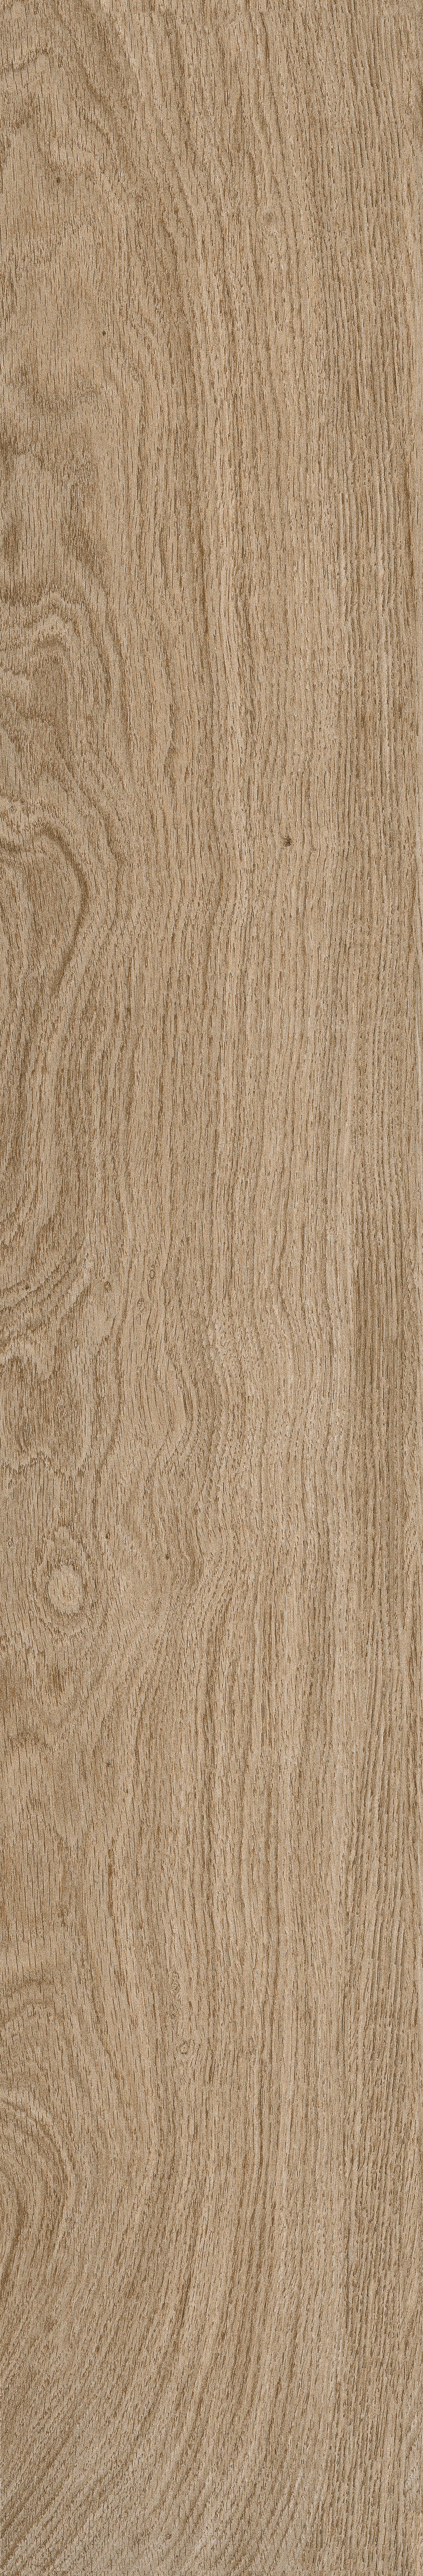 Giania 木紋磚 Bm122502m